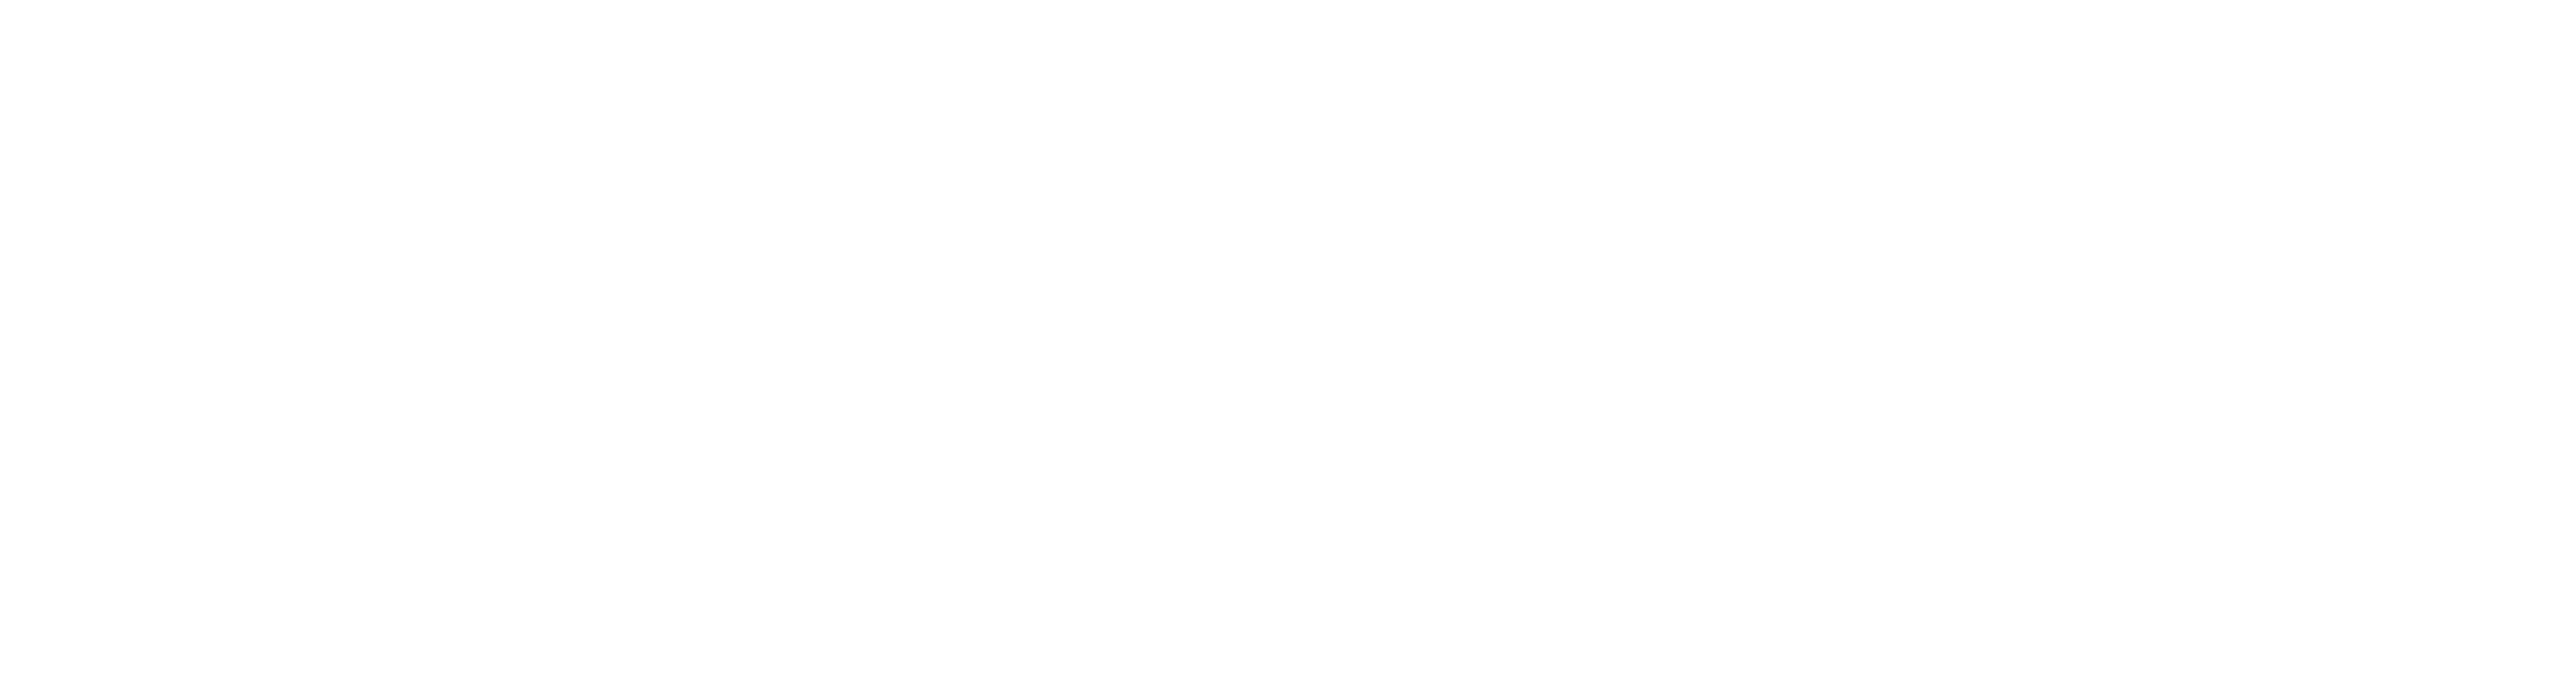 Banyan Preserve logo